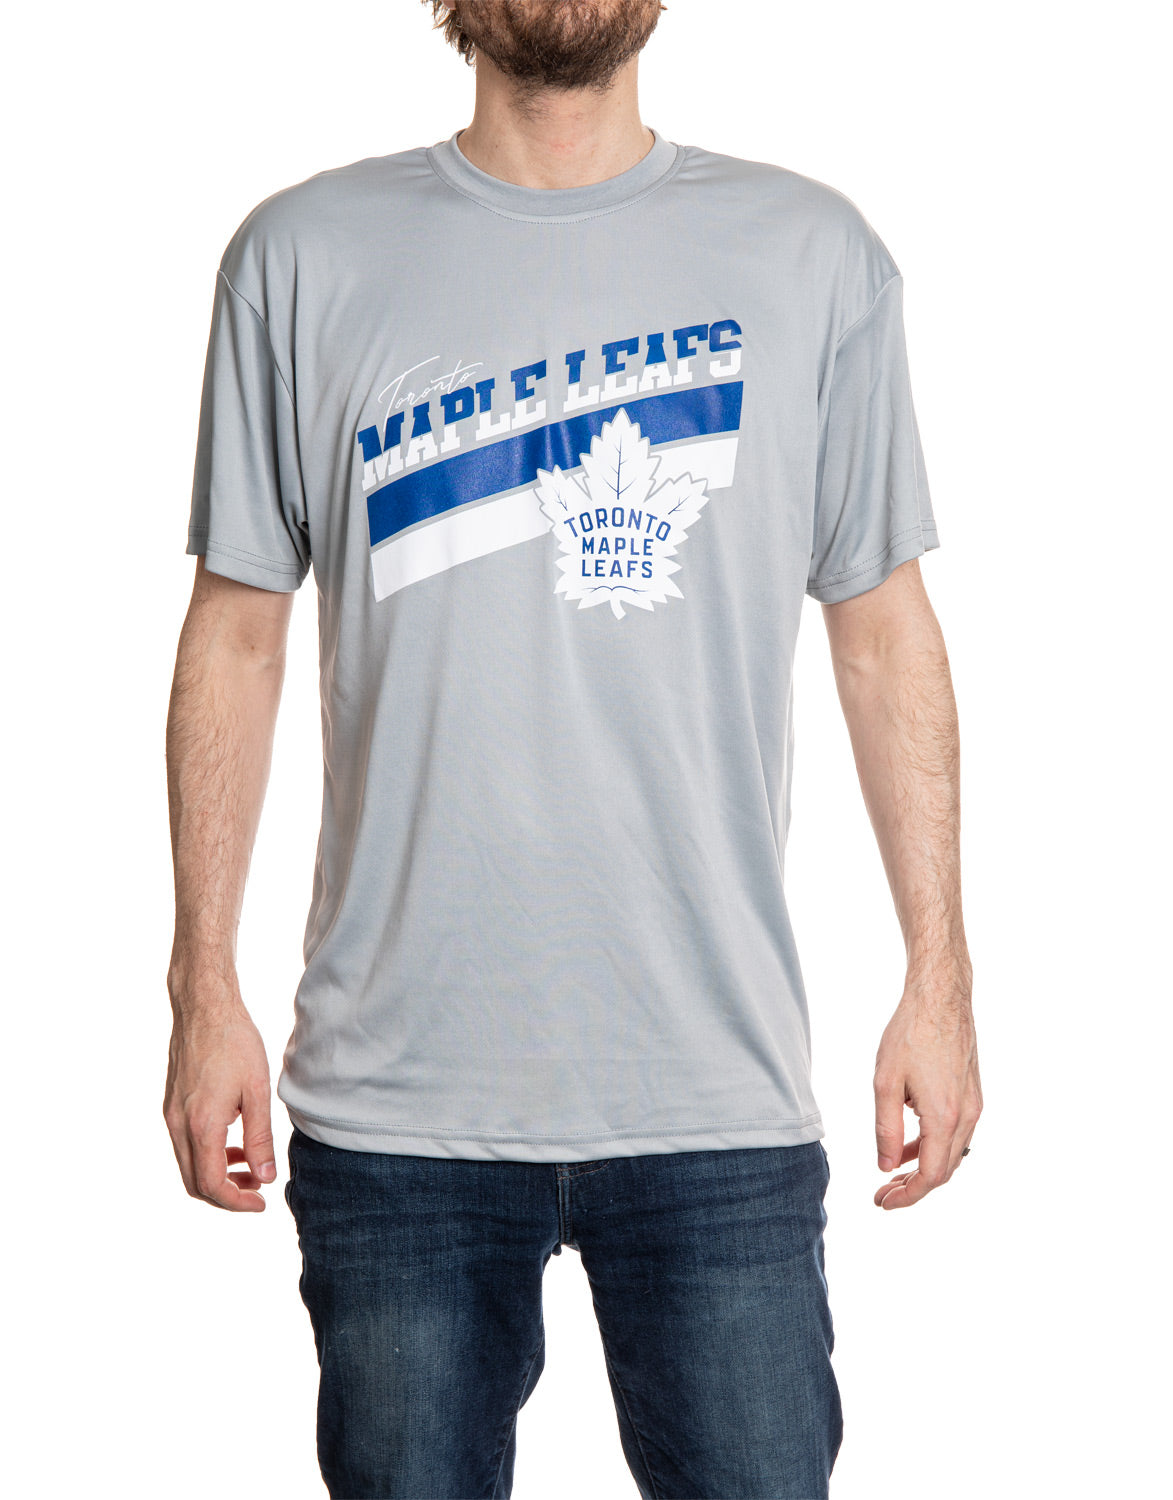 Toronto Maple Leafs Men's Short Sleeve "Stripes" Rash Guard Wicking T-Shirt